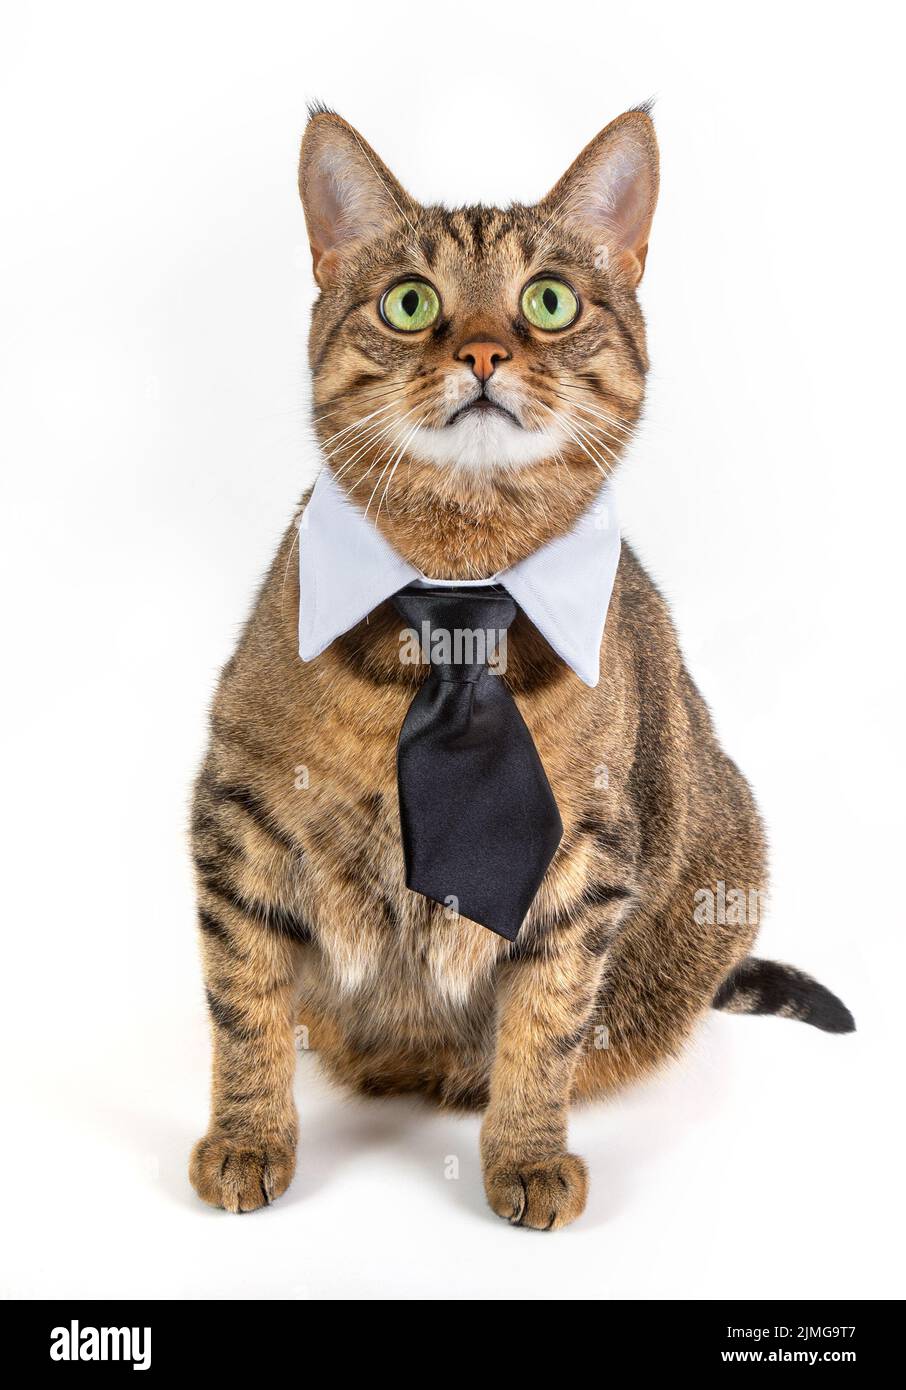 A beautiful cat in a tie Stock Photo